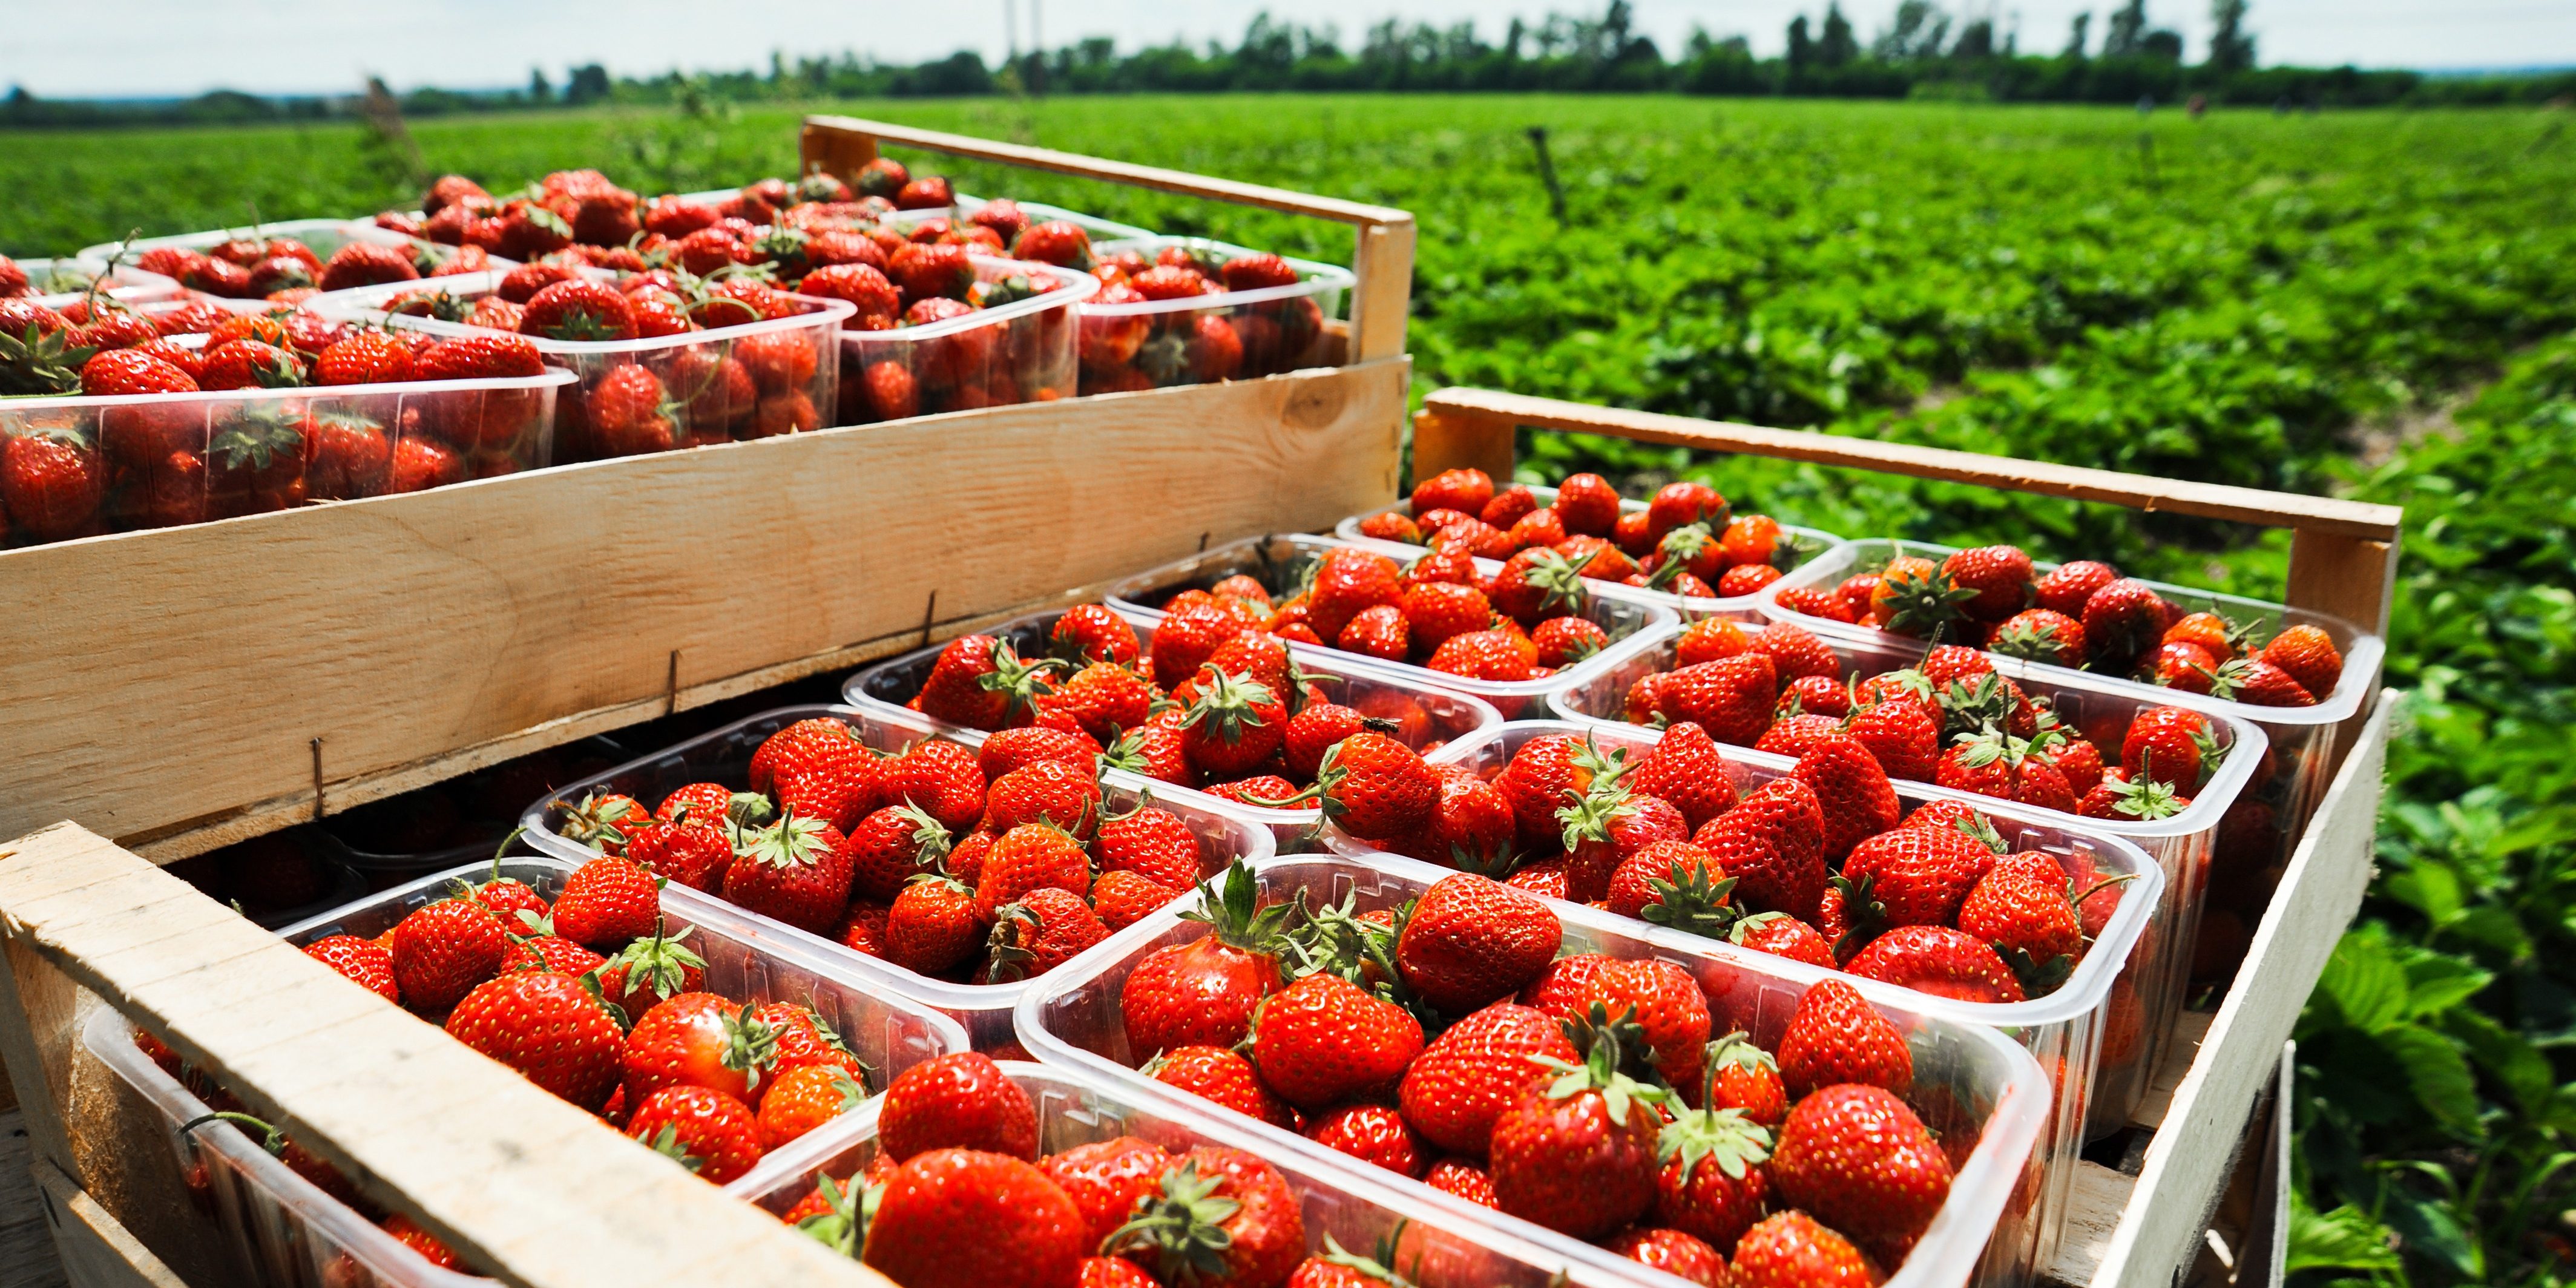 https://vegetablegrowersnews.com/wp-content/uploads/2018/07/California-strawberries.jpg